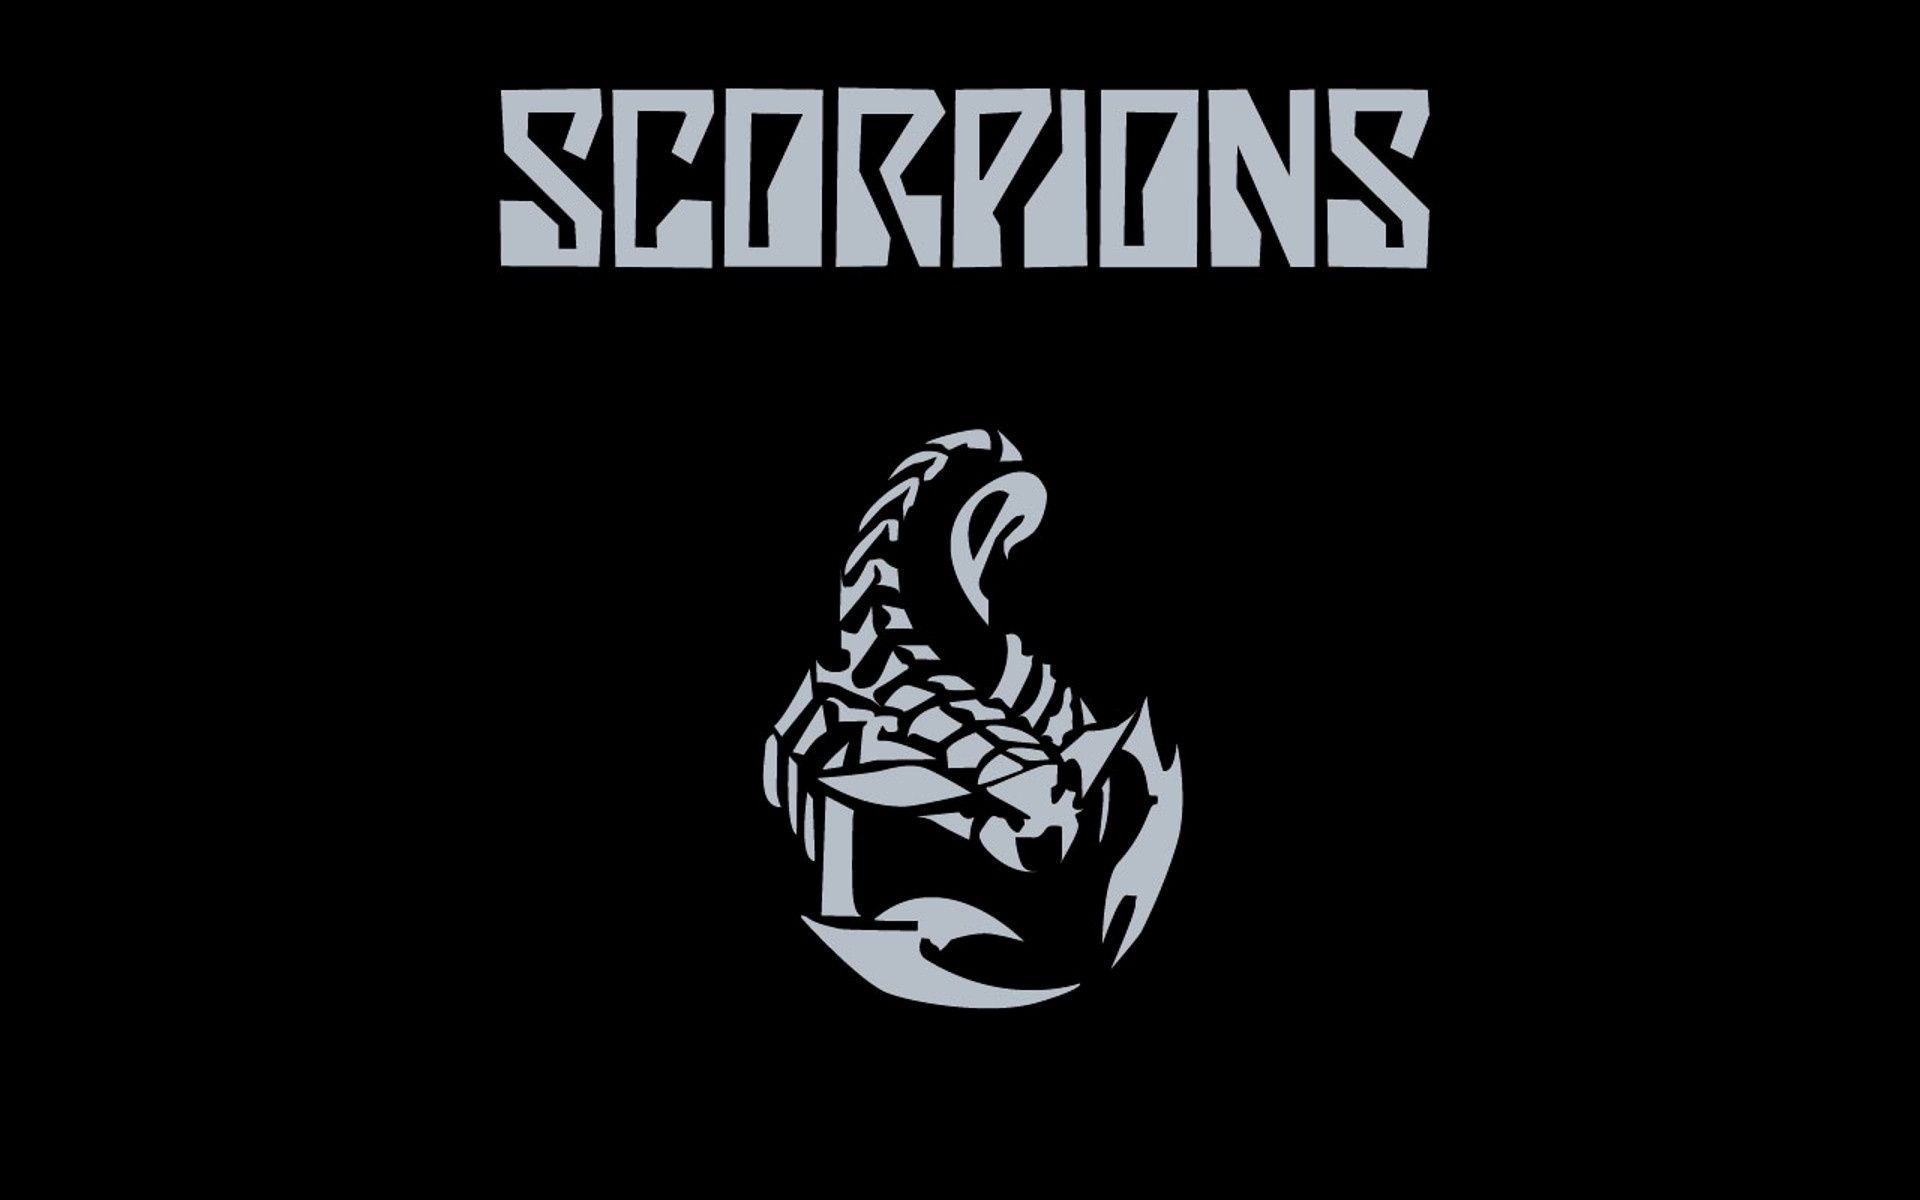 Scorpion Iphone Wallpapers